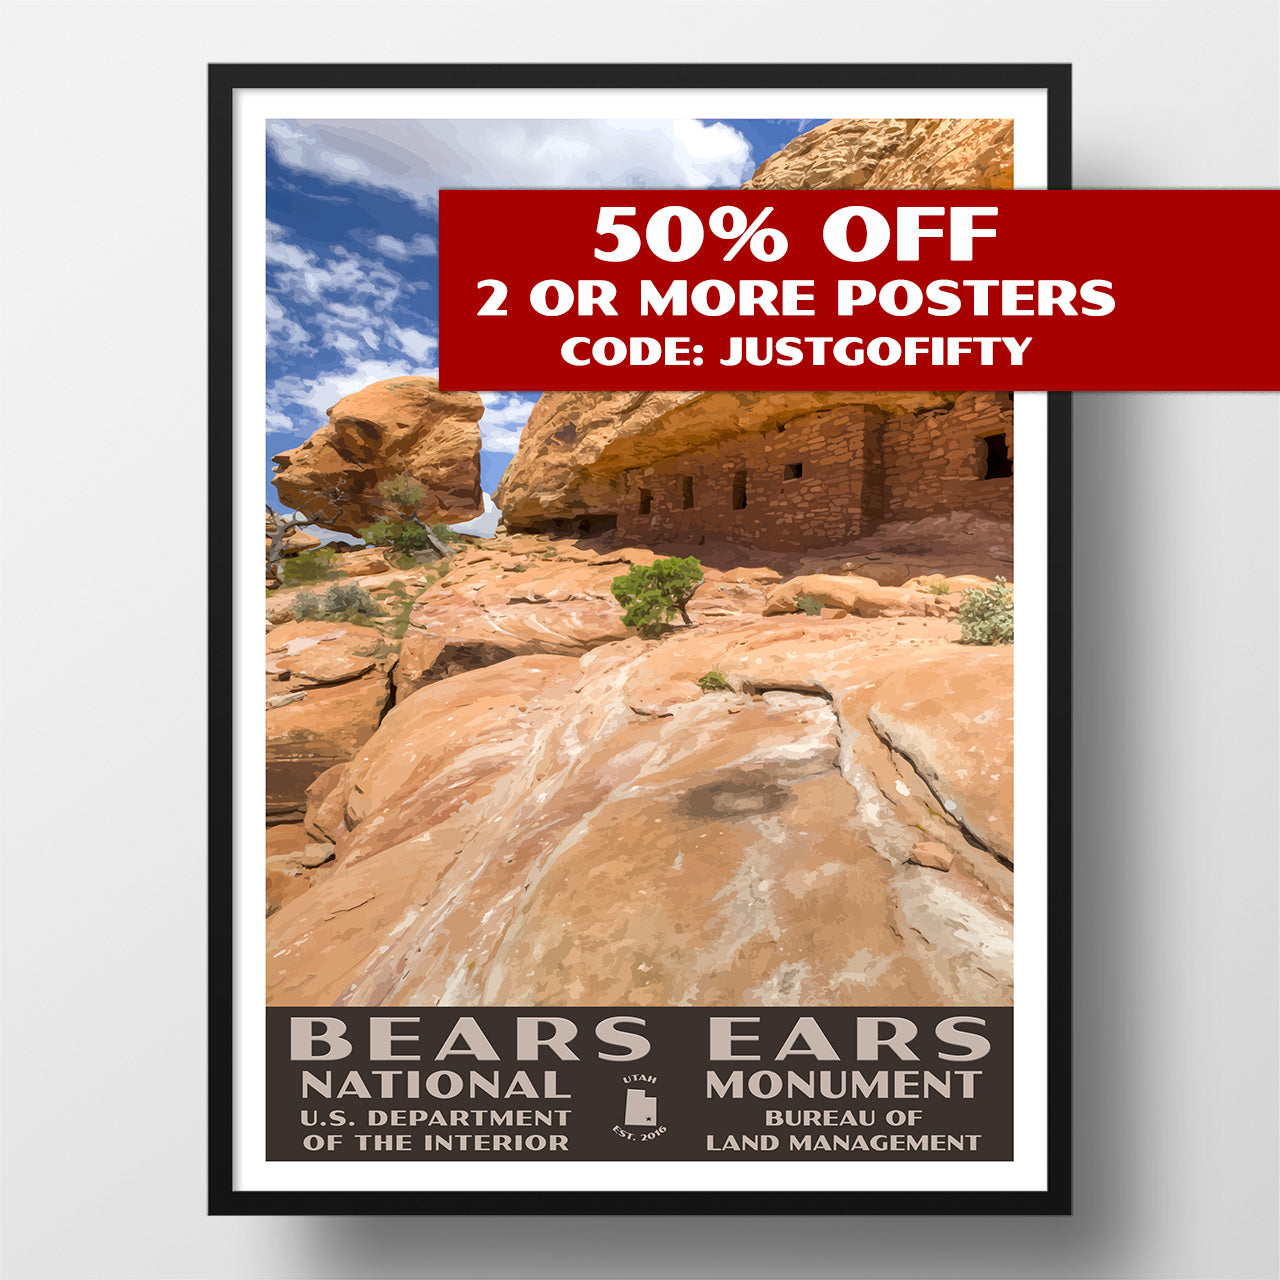 Bears Ears National Monument poster